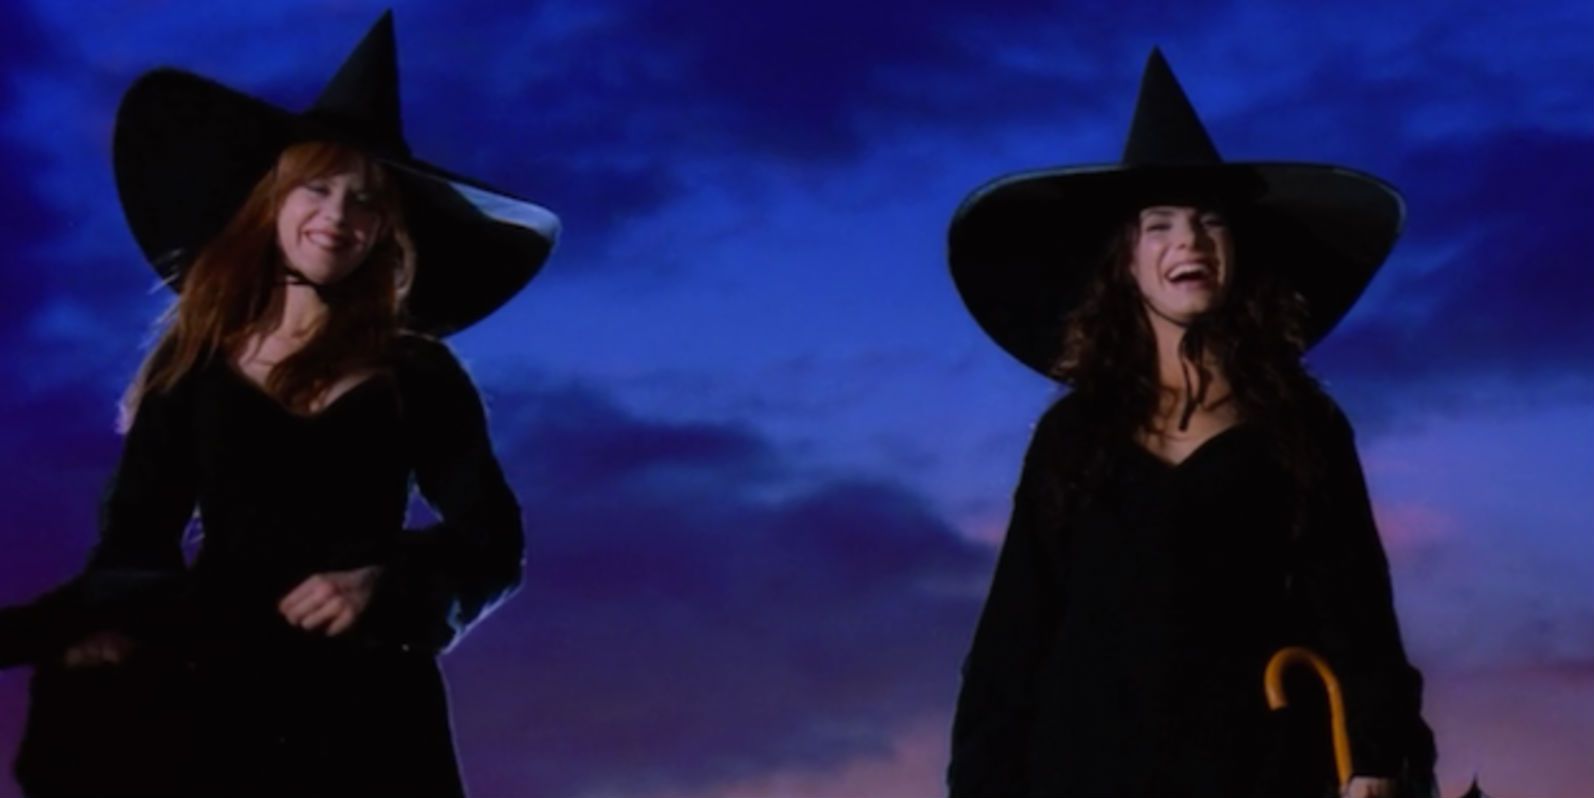 Nicole Kidman and Sandra Bullock in Practical Magic - witch costumes